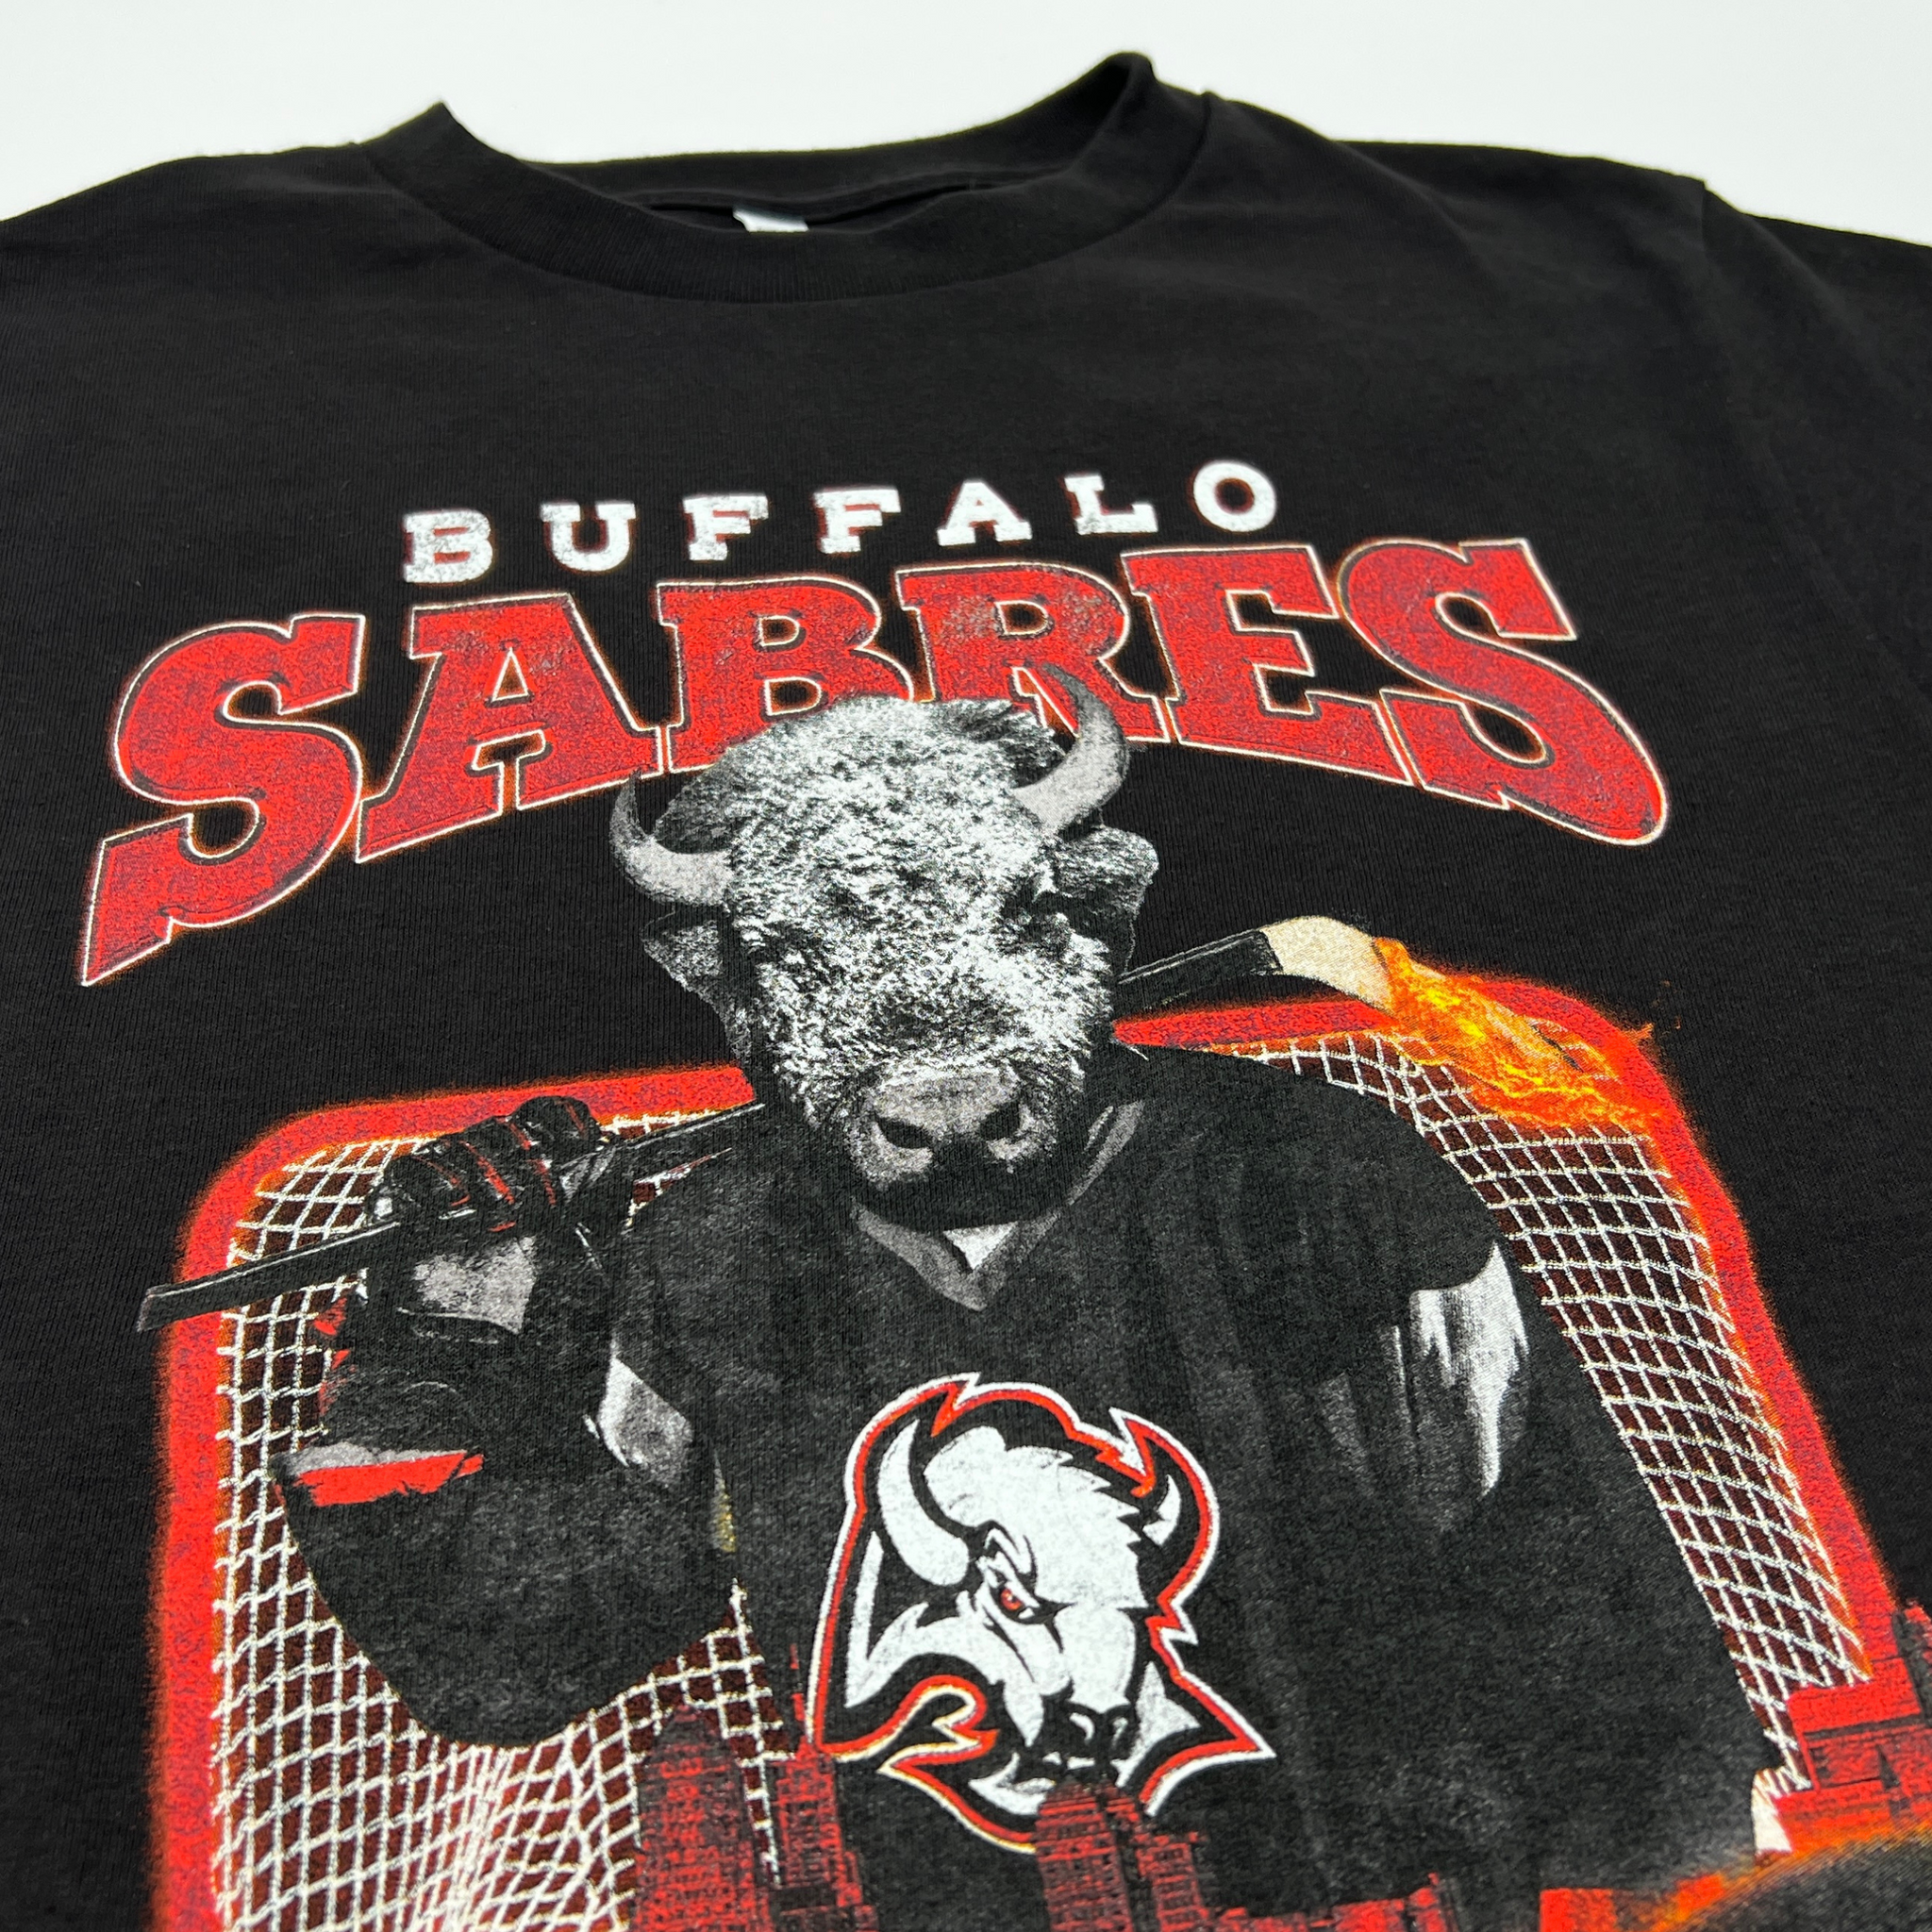 Buffalo Sabres Goat Head Logo With Bison Black Short Sleeve Shirt